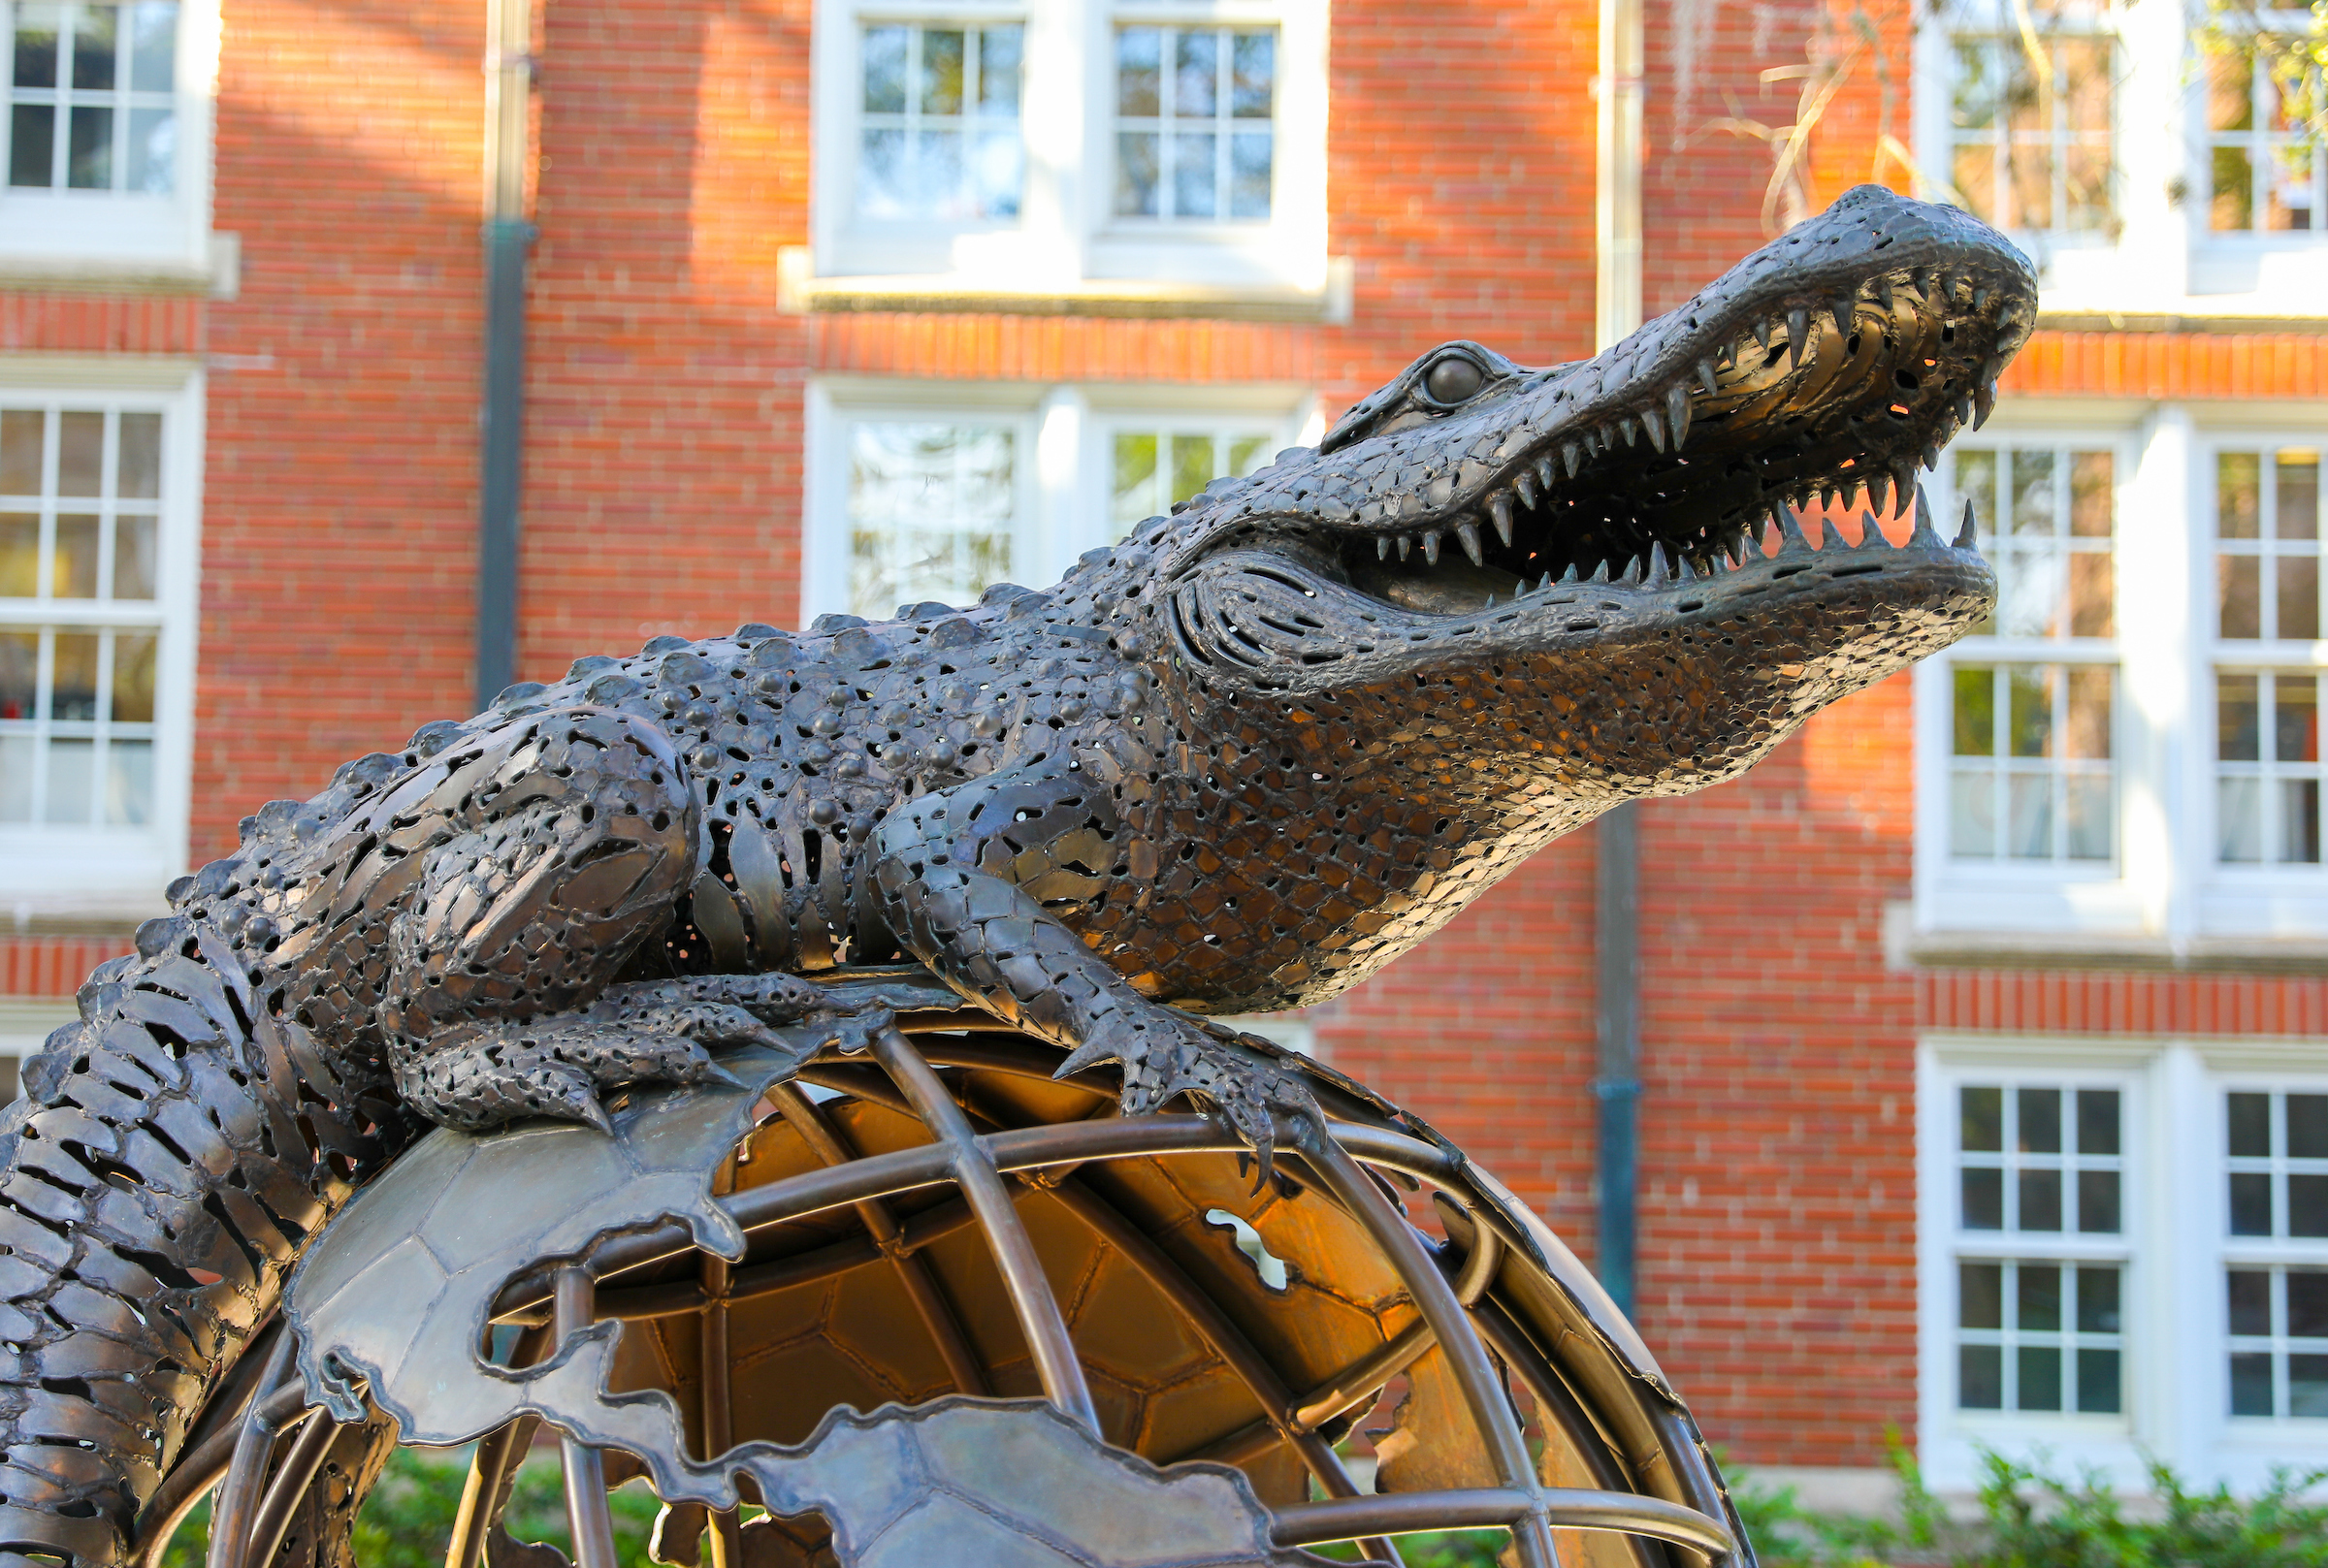 Gator on a globe statue